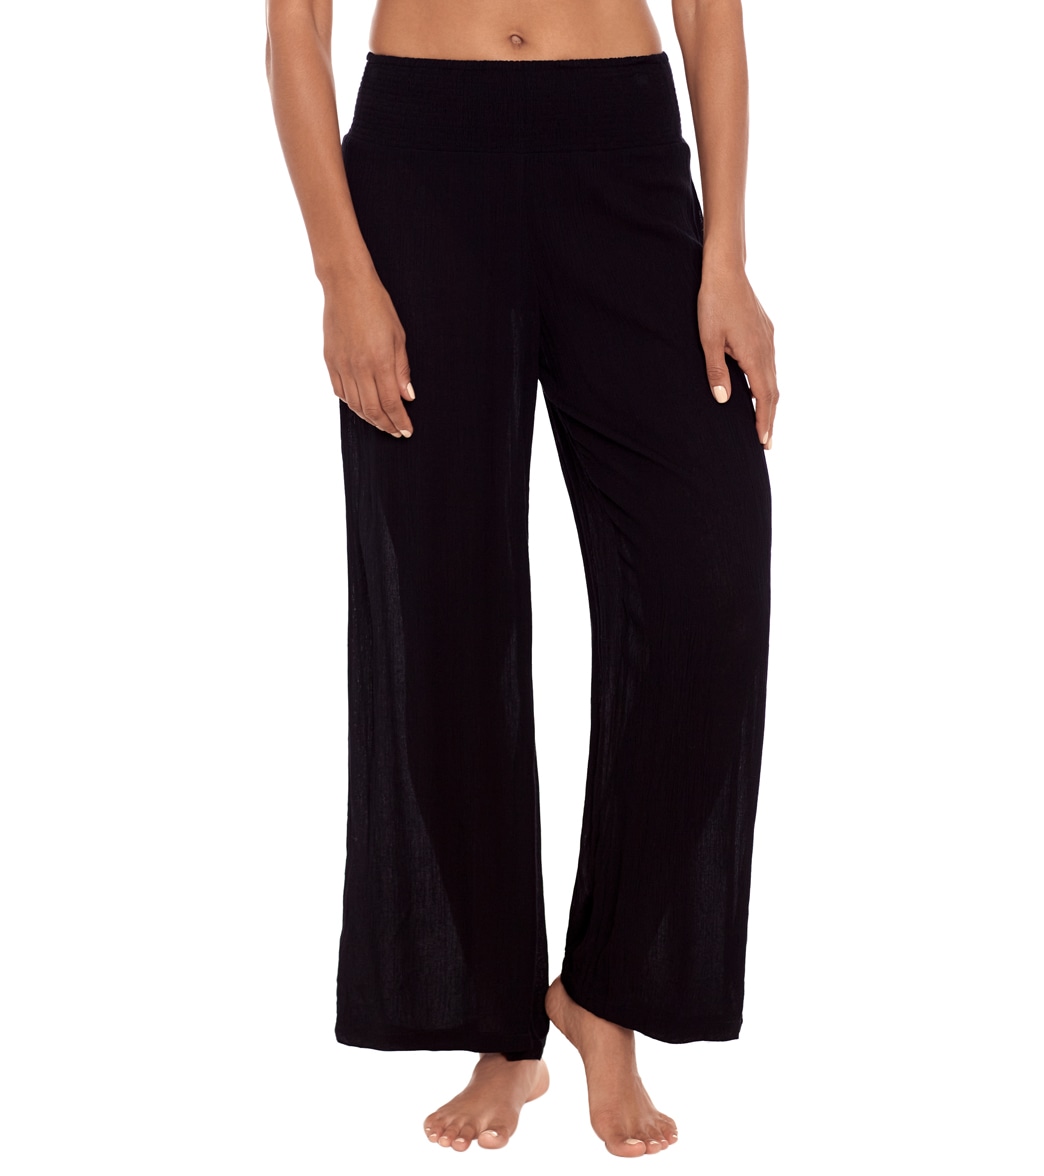 Ralph Lauren Lauren Women's Crinkle Rayon Cover Up Pants - Black Large - Swimoutlet.com